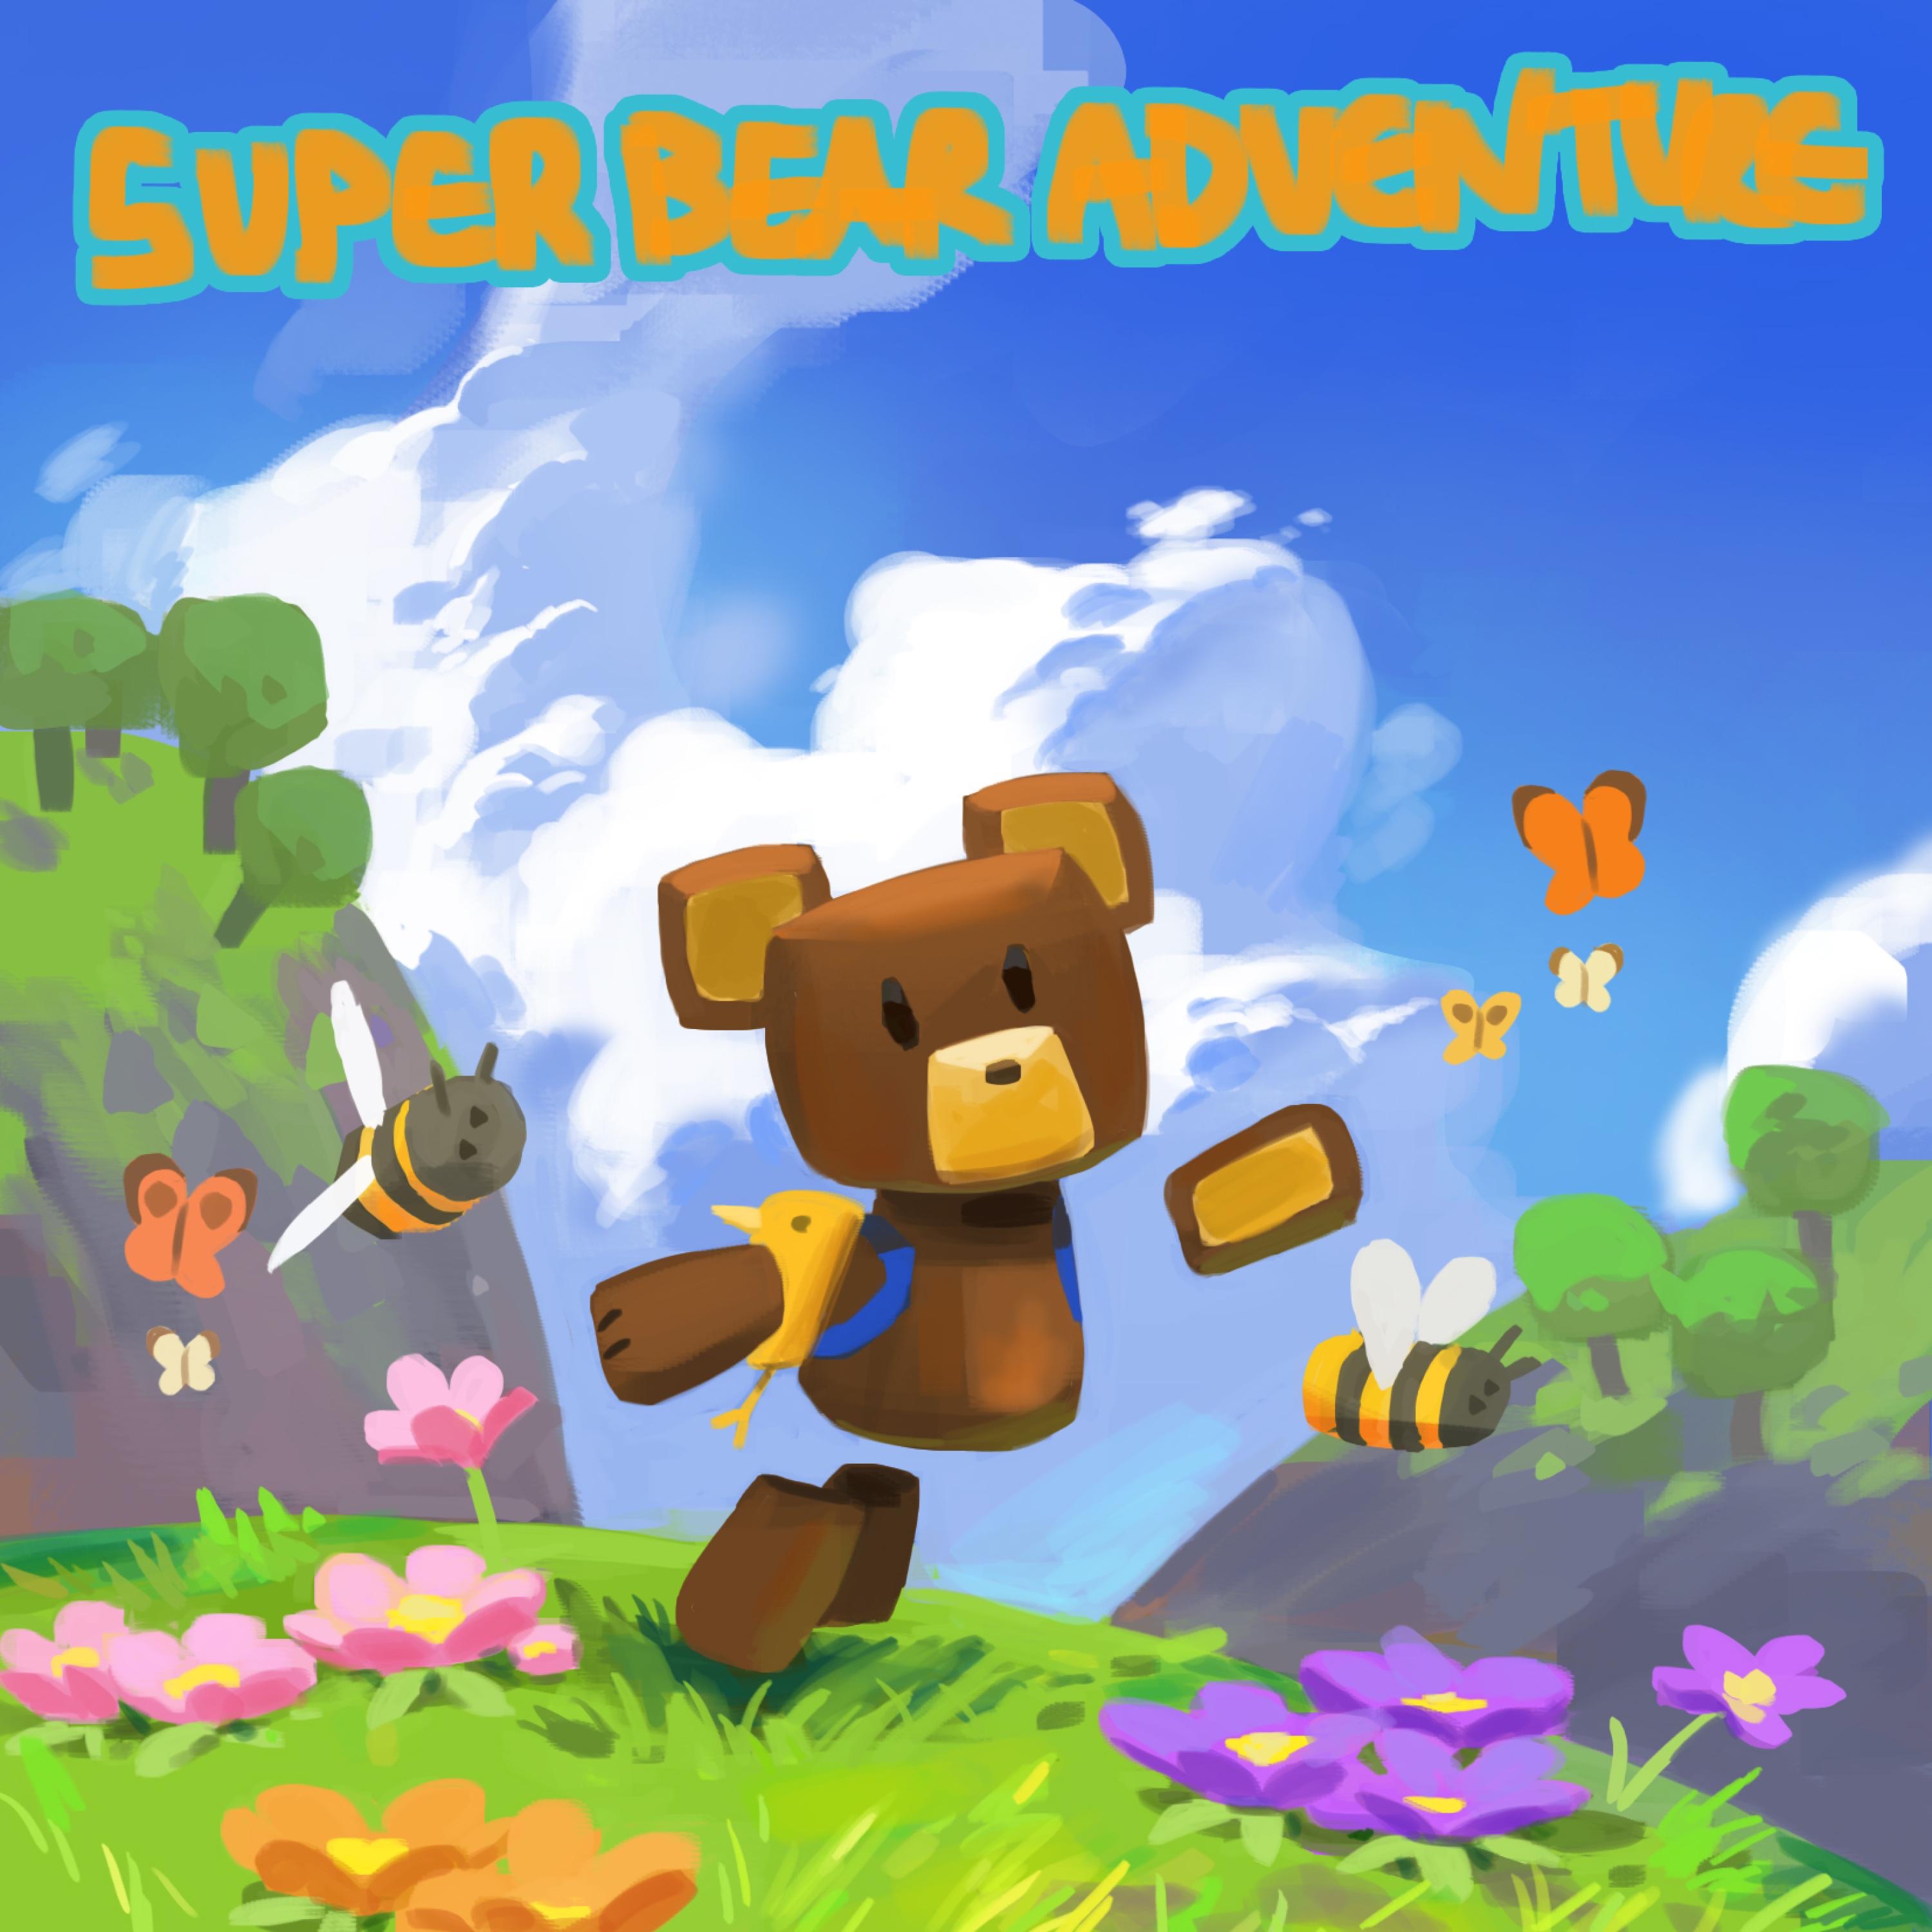 Super bear adventure 1.9 9.1. Bear Adventure игра. Супер Беар адвенчер. Приключения супер мишки. Супер беатвинчер.